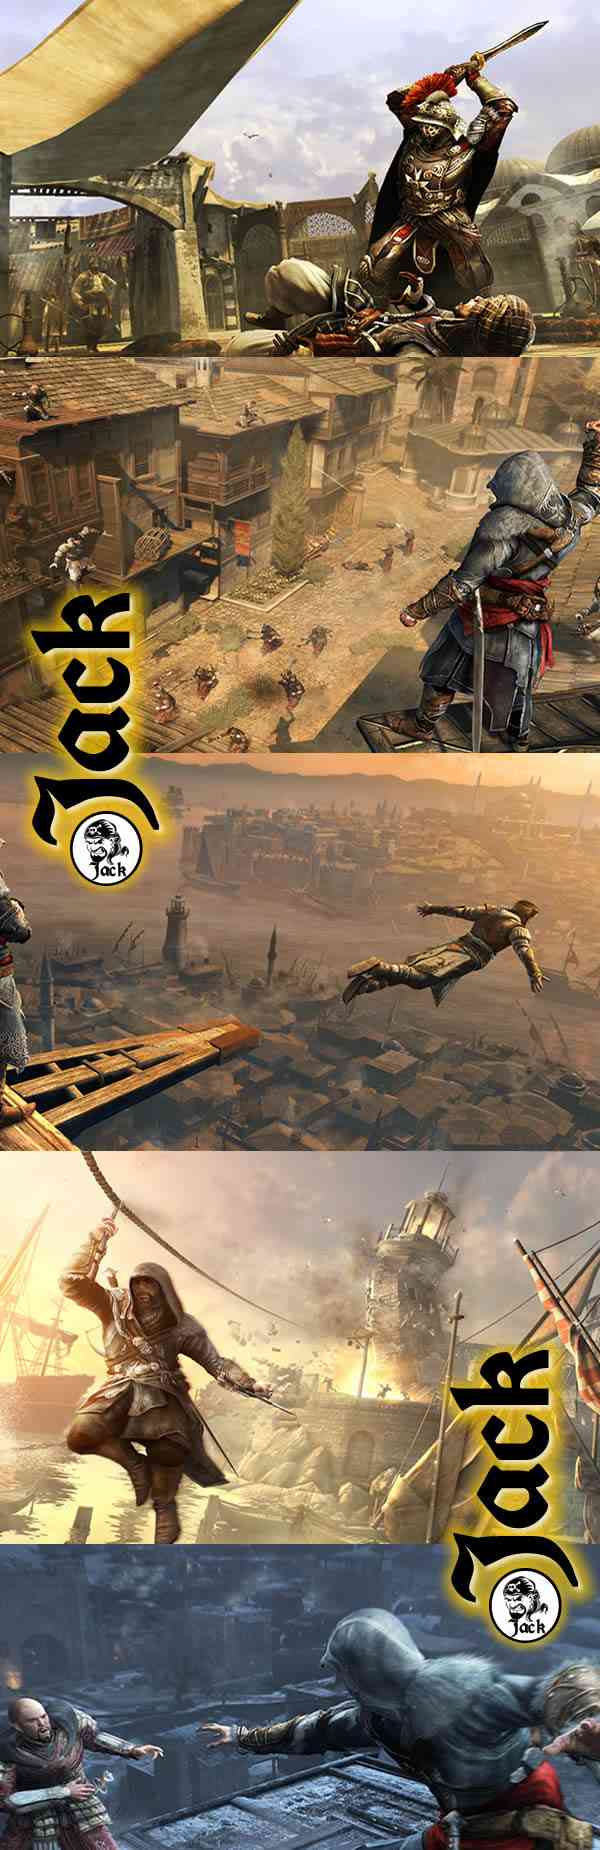 Assassins Creed 3 - PC FULL - SKIDROW CRACK